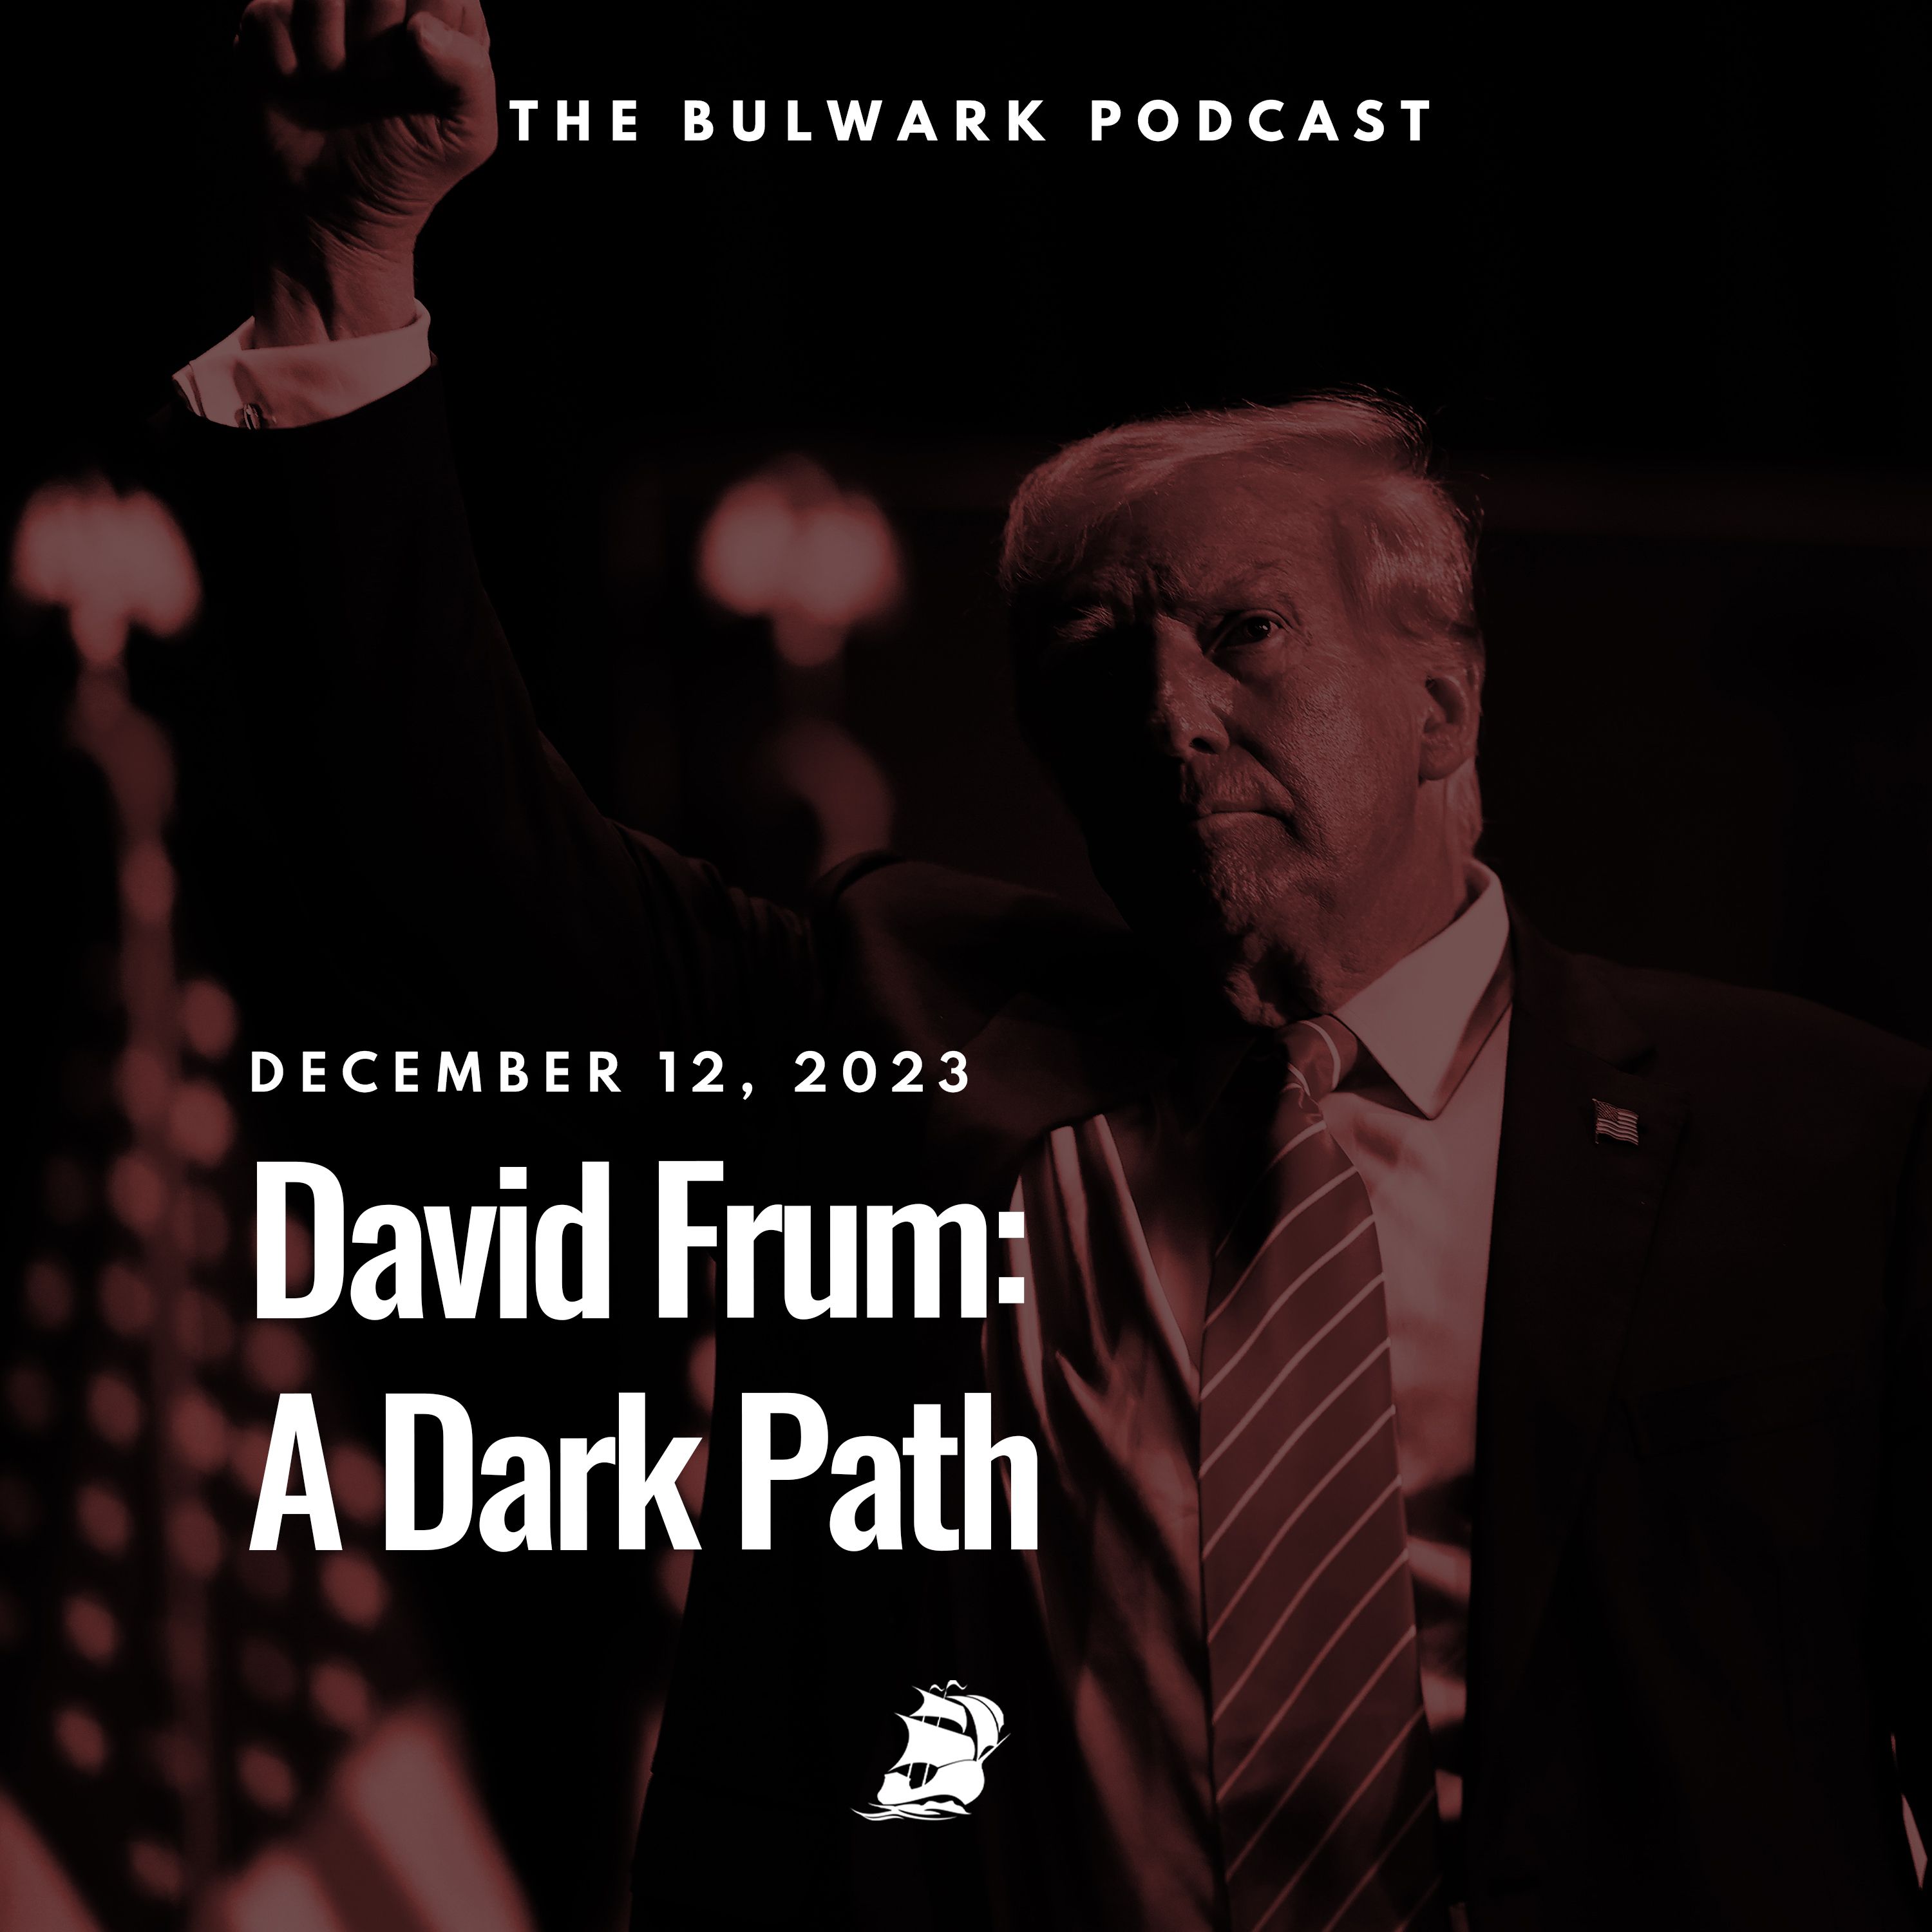 David Frum: A Dark Path by The Bulwark Podcast